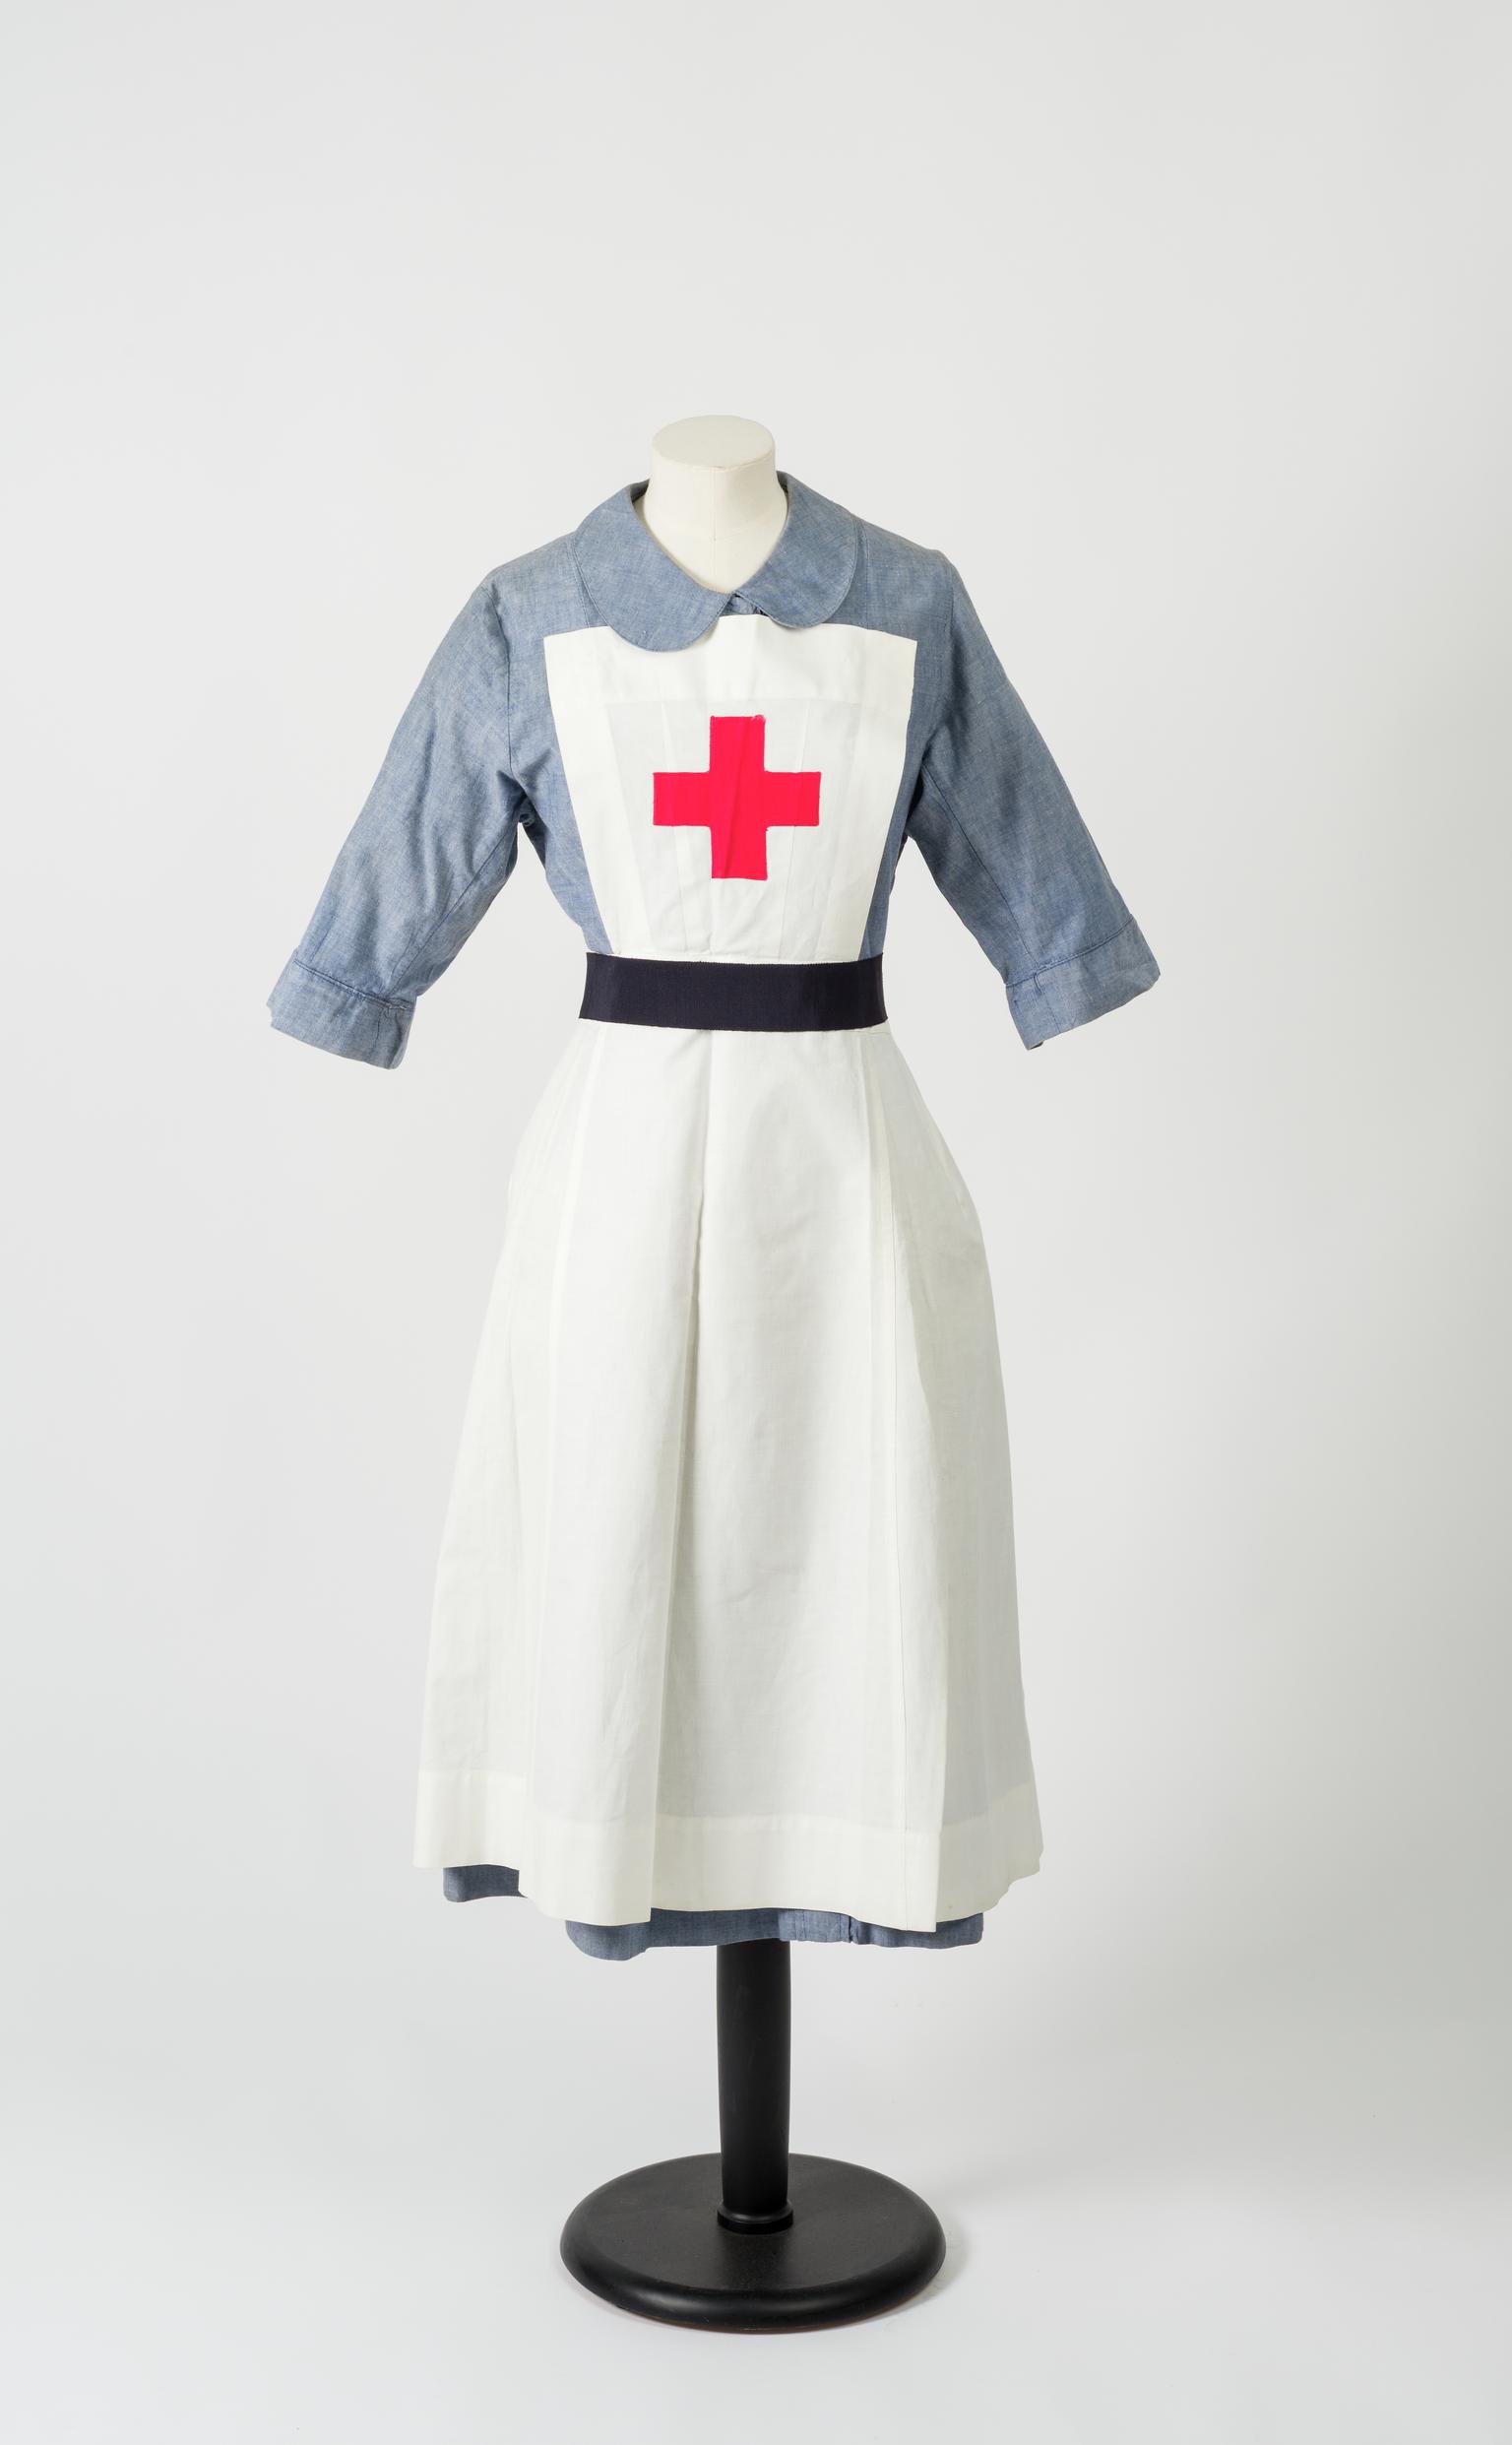 Nurse's dress, apron and belt, 1939 - 1945